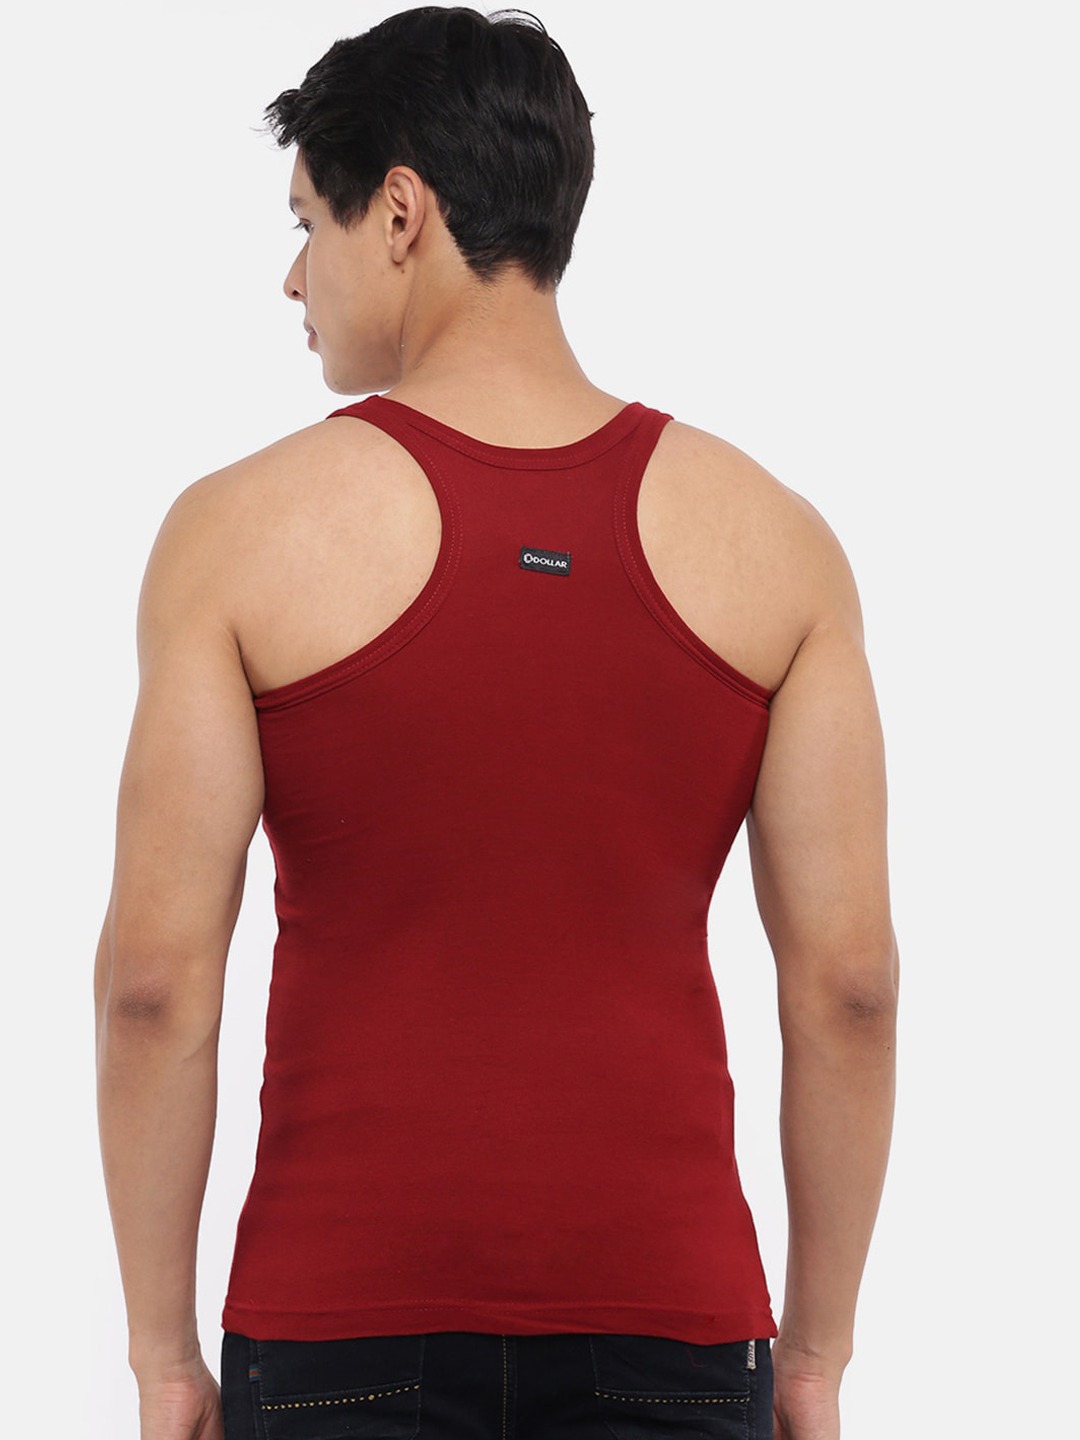 Clothing Innerwear Vests | Dollar Bigboss Men Pack Of 2 Assorted Cotton Innerwear Gym Vests - MB09533